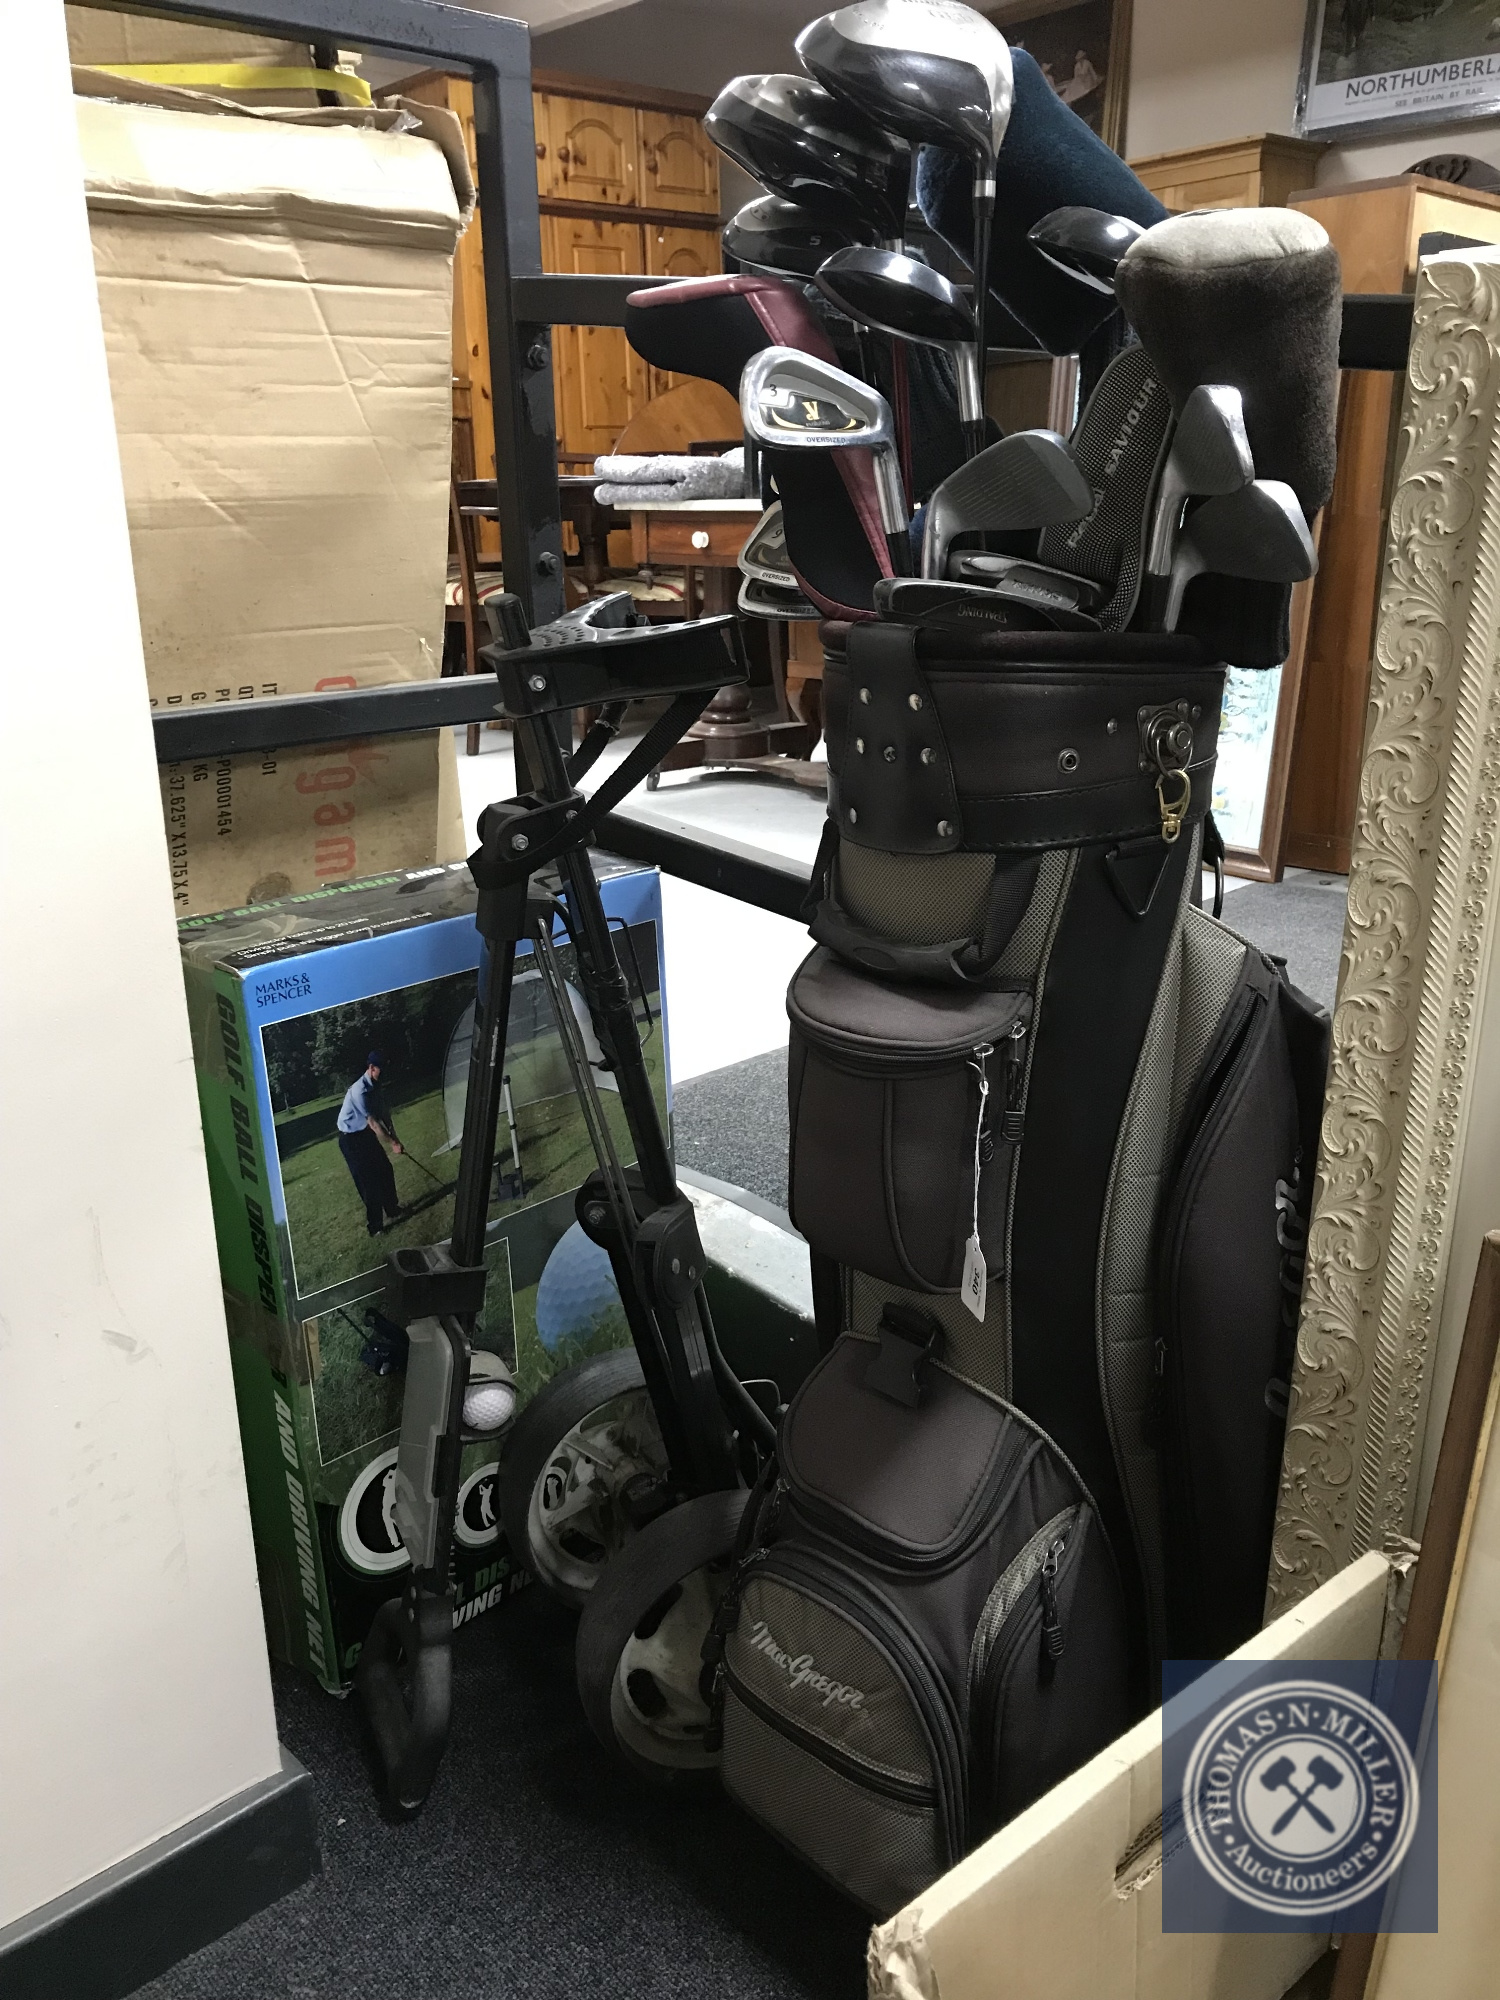 A McGregor golf bag containing golf drivers, irons,